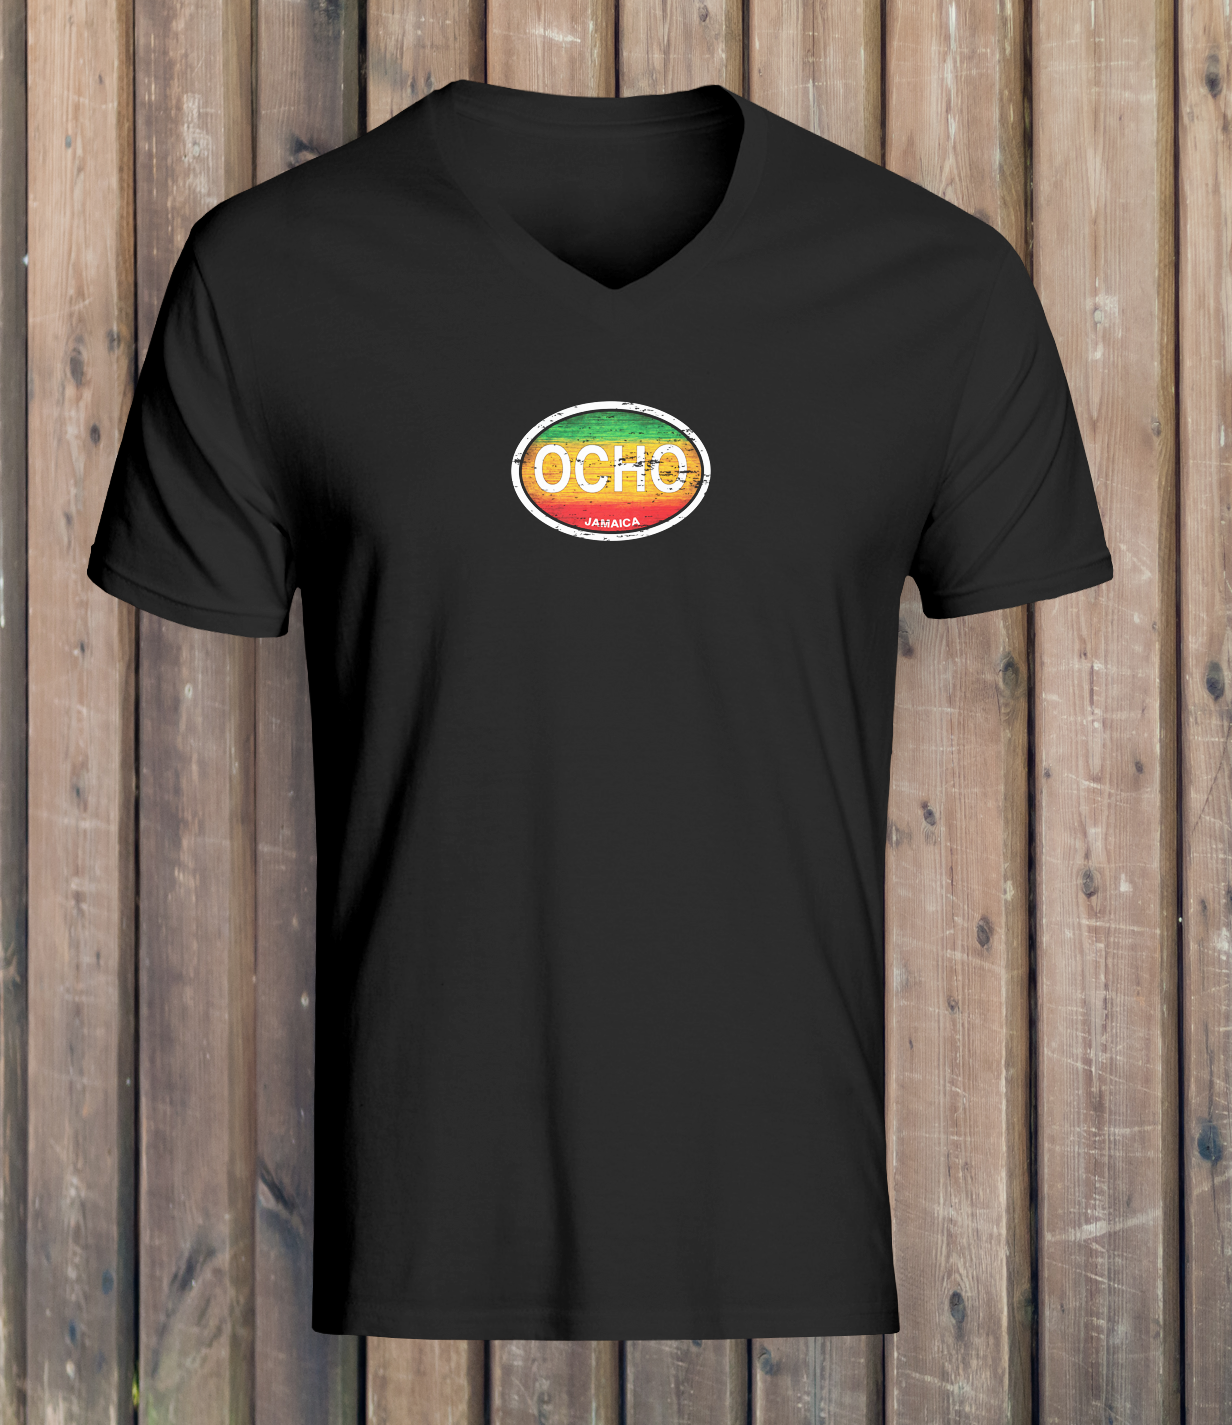 Ocho Rios Women's Rasta V-Neck T-Shirts - My Destination Location